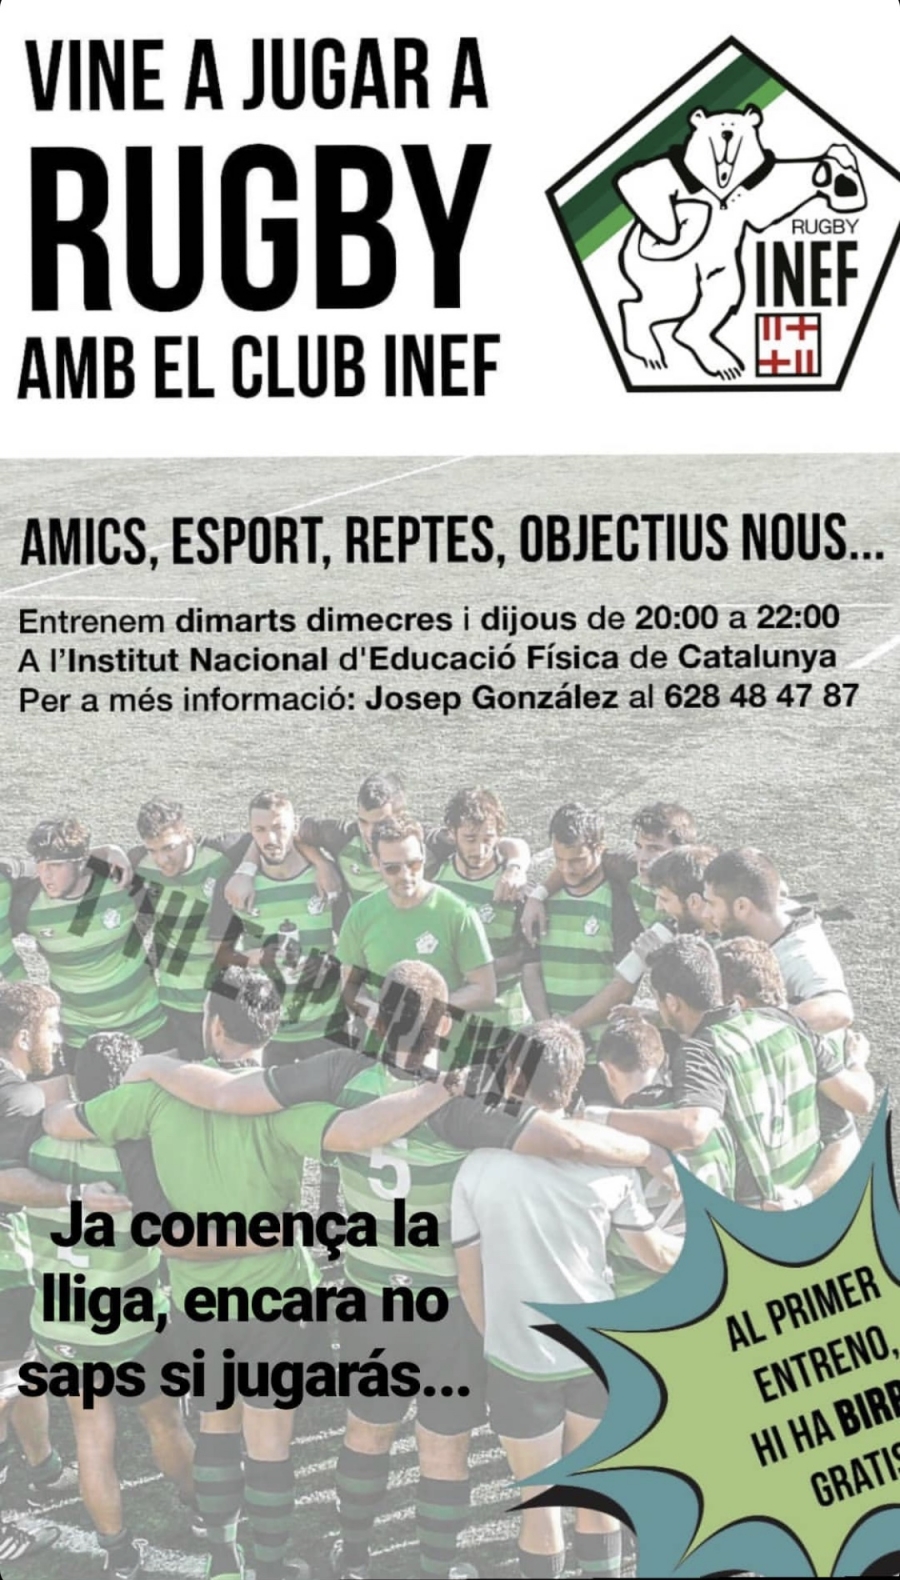 Vine a jugar a rugby amb INEF Barcelona